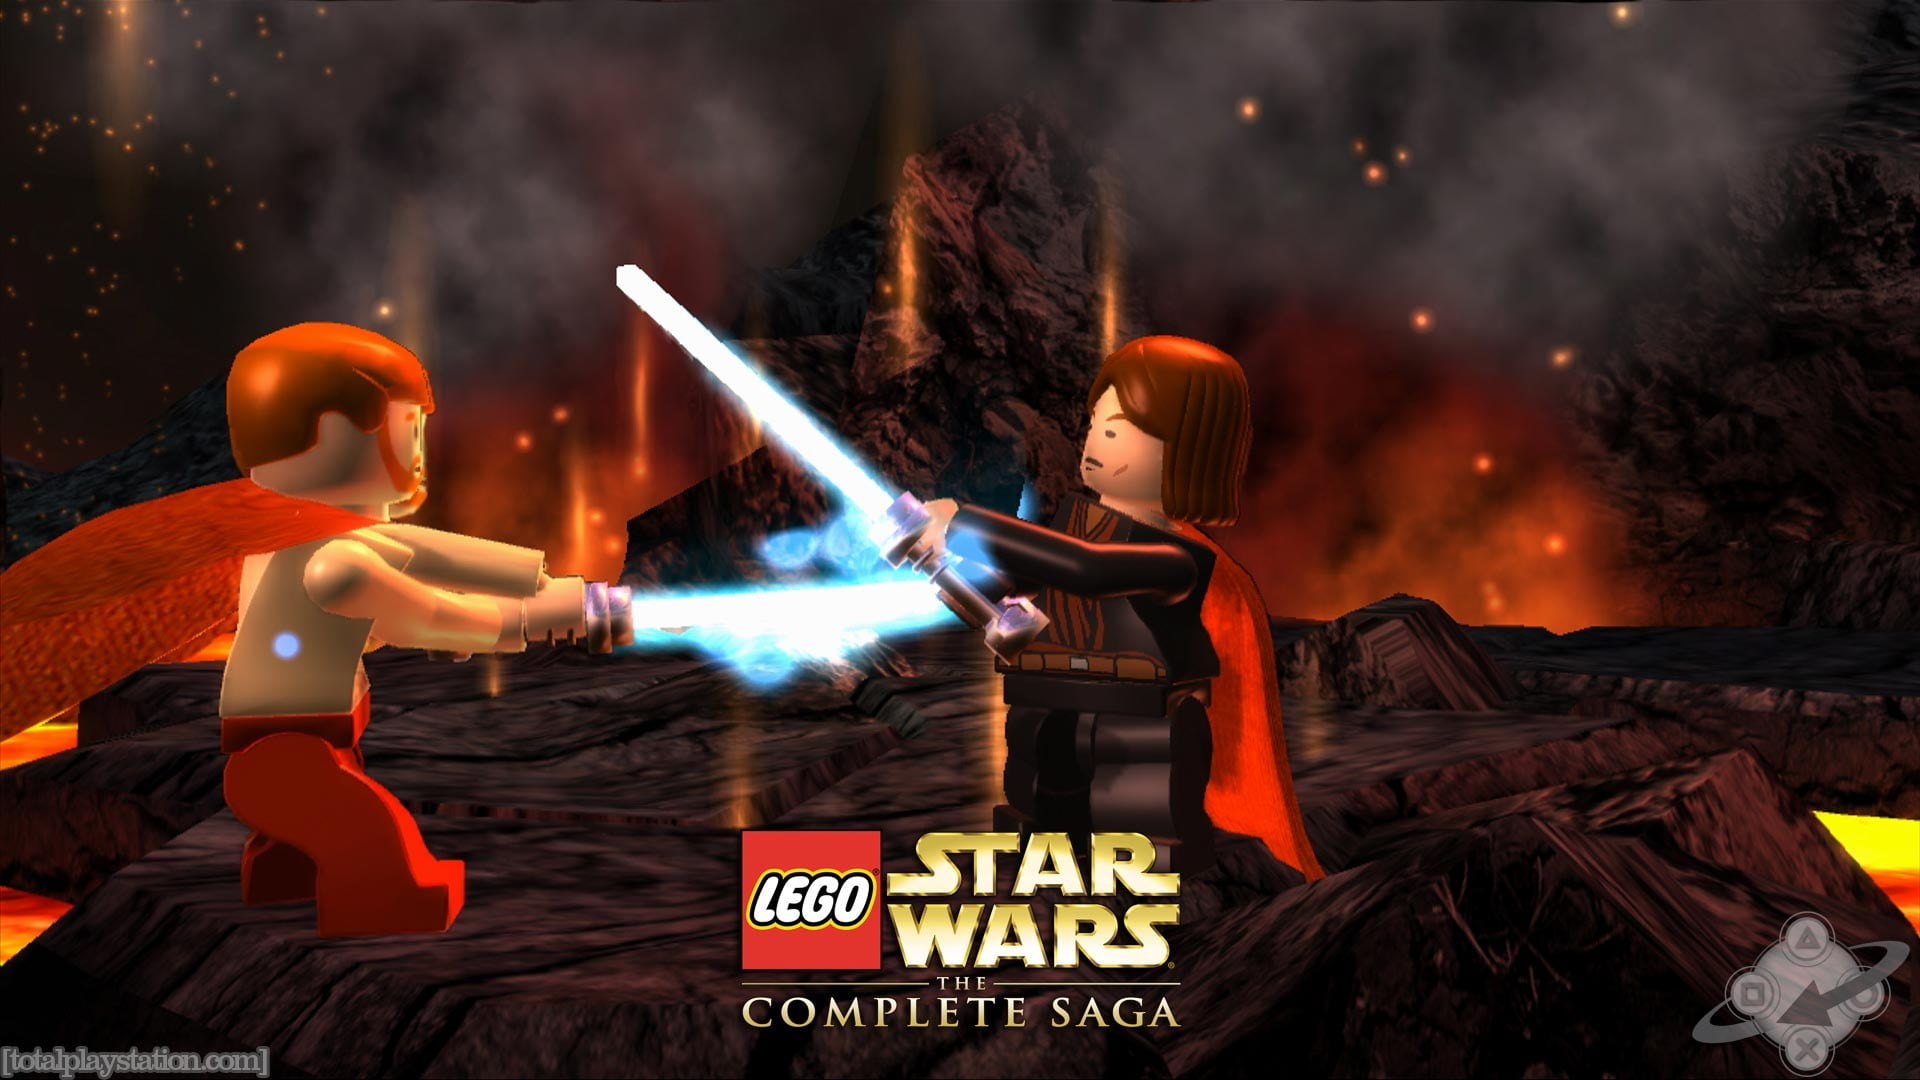 LEGO Star Wars Complete saga, Star Wars, LEGO, LEGO Star Wars, video ...